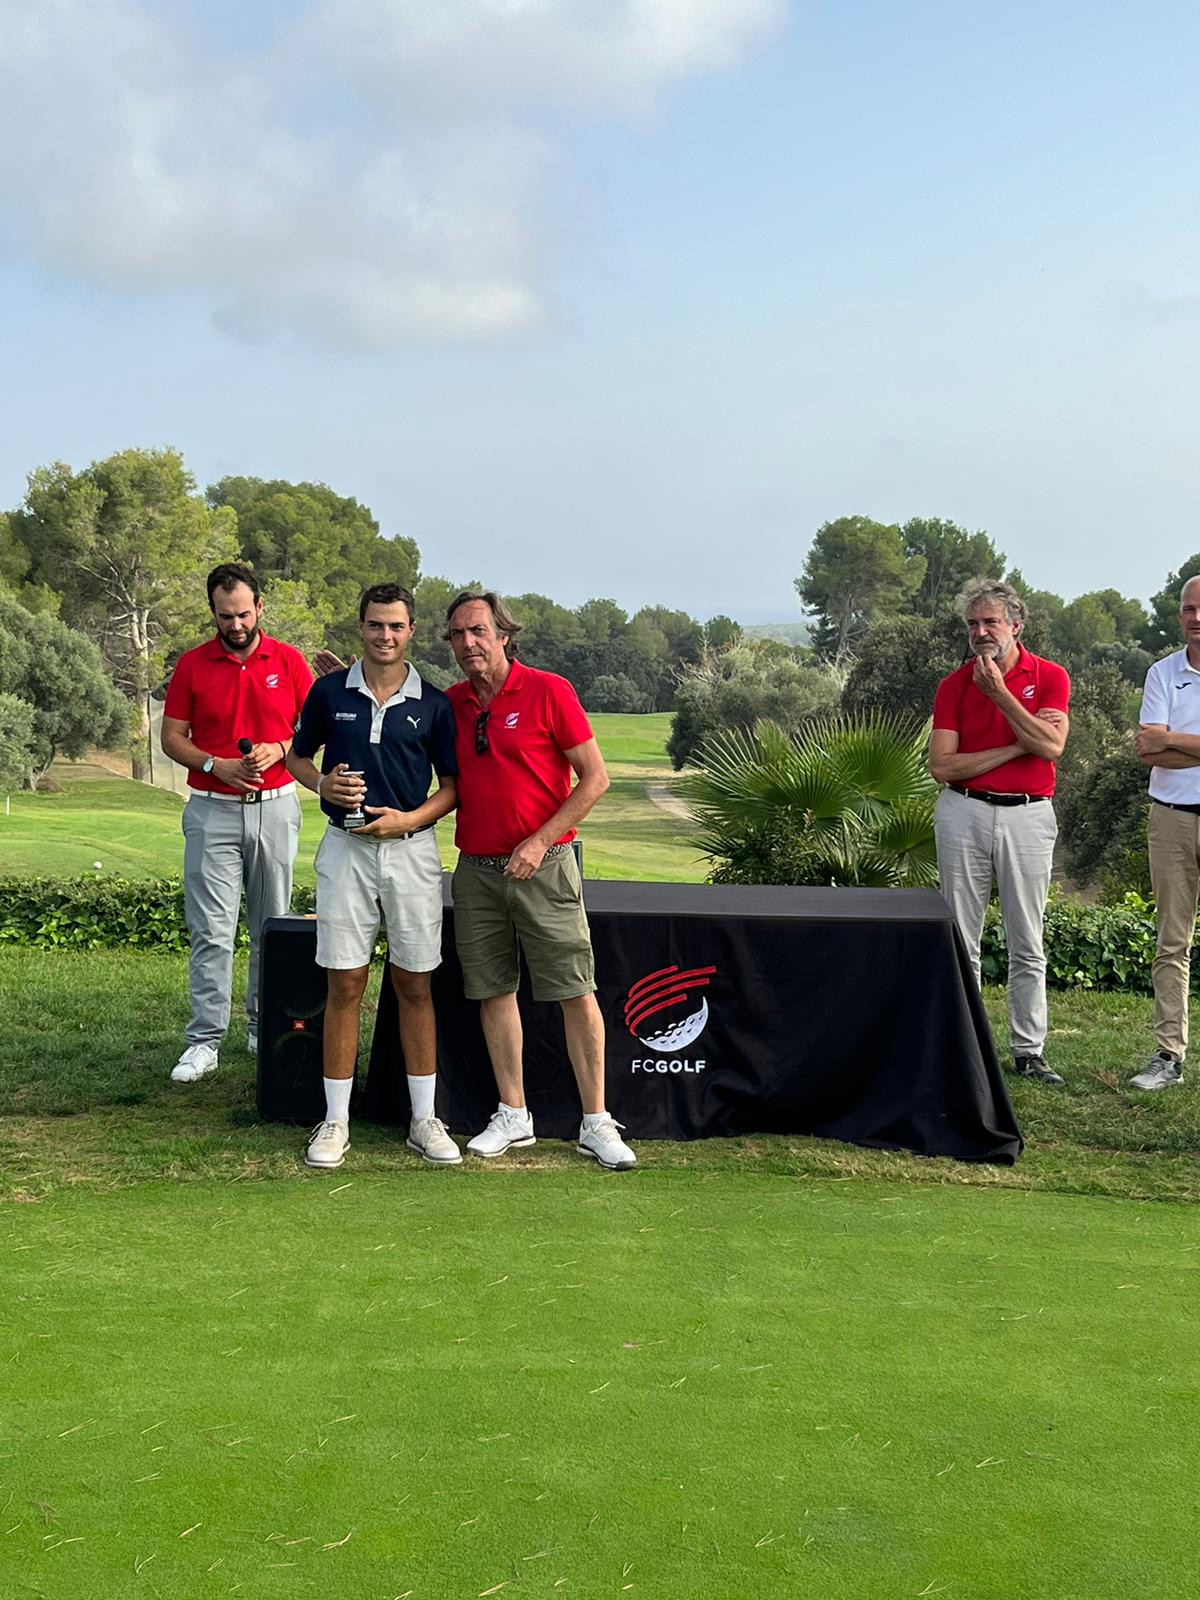 Ja tenim nous campions de Catalunya Match Play Sub16 a Golf Costa Daurada